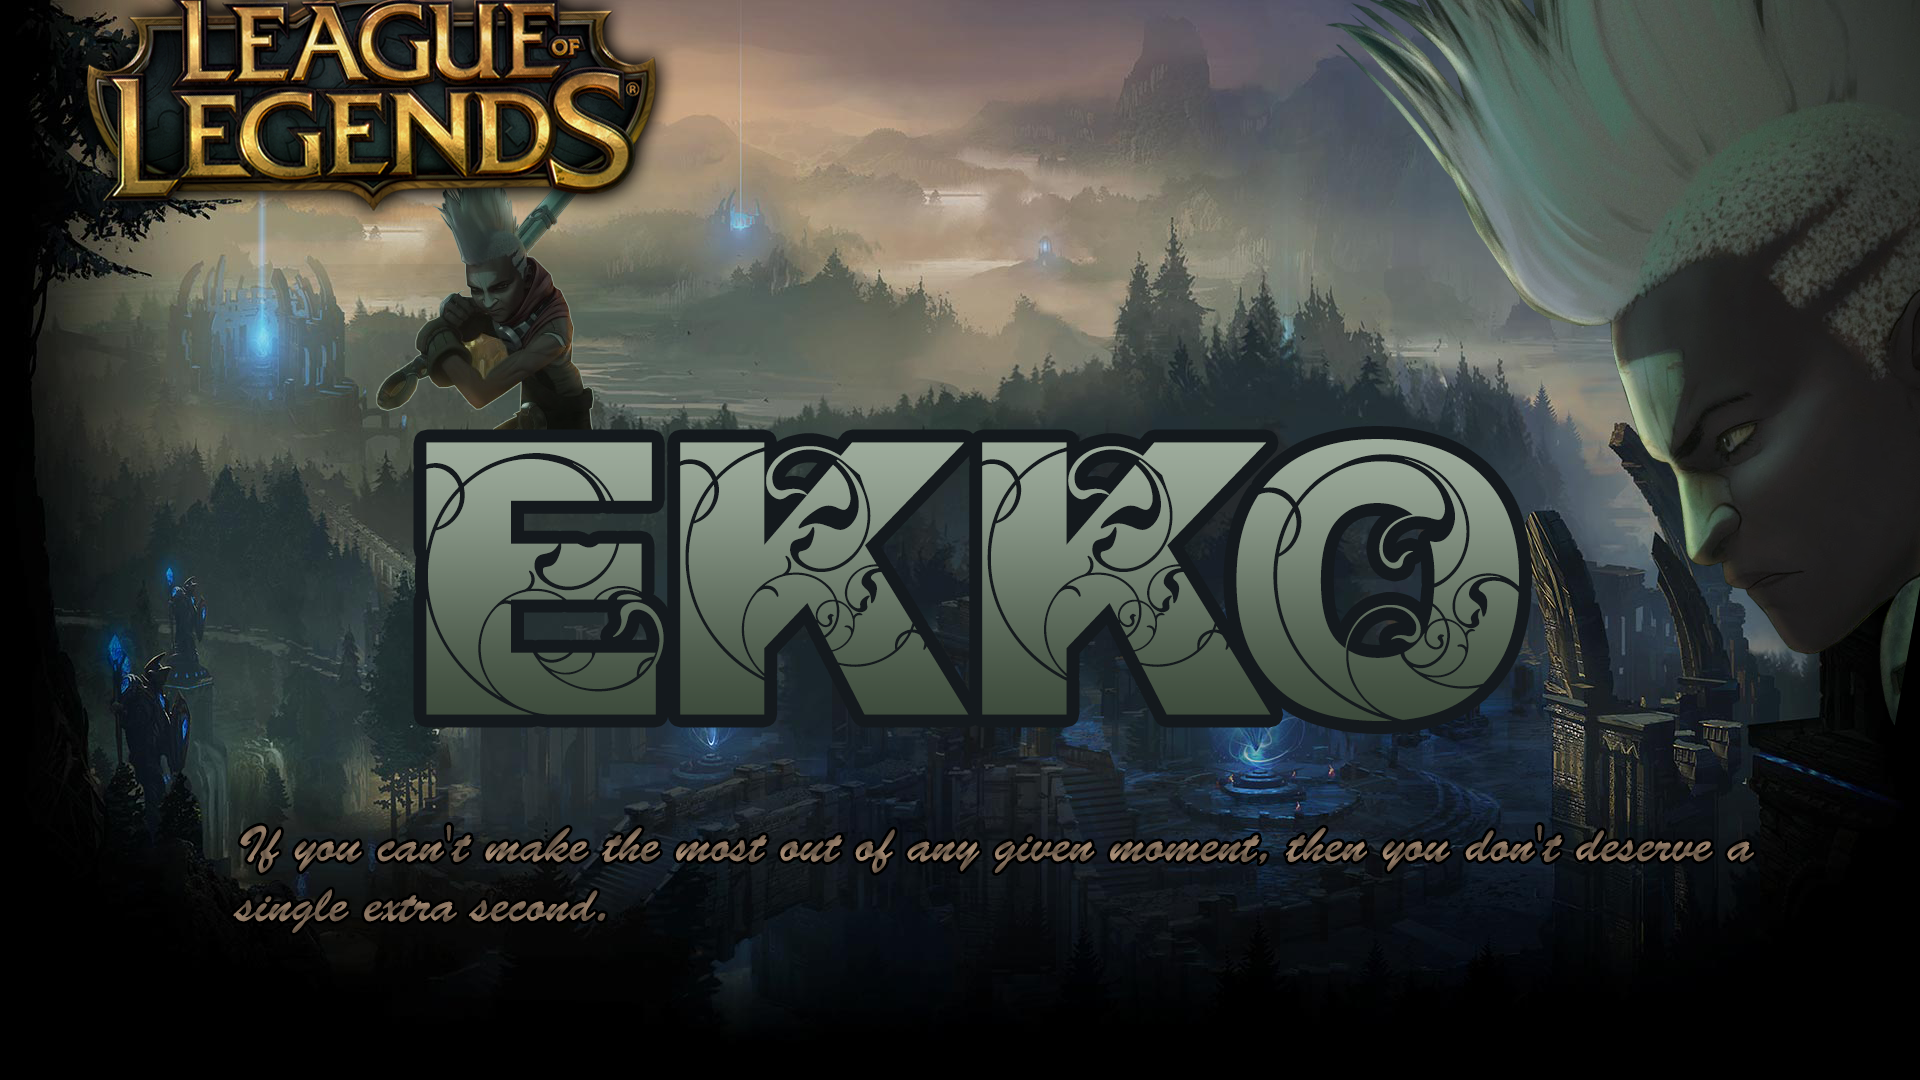 Ekko New League of Legends Champion by BlankDesigns